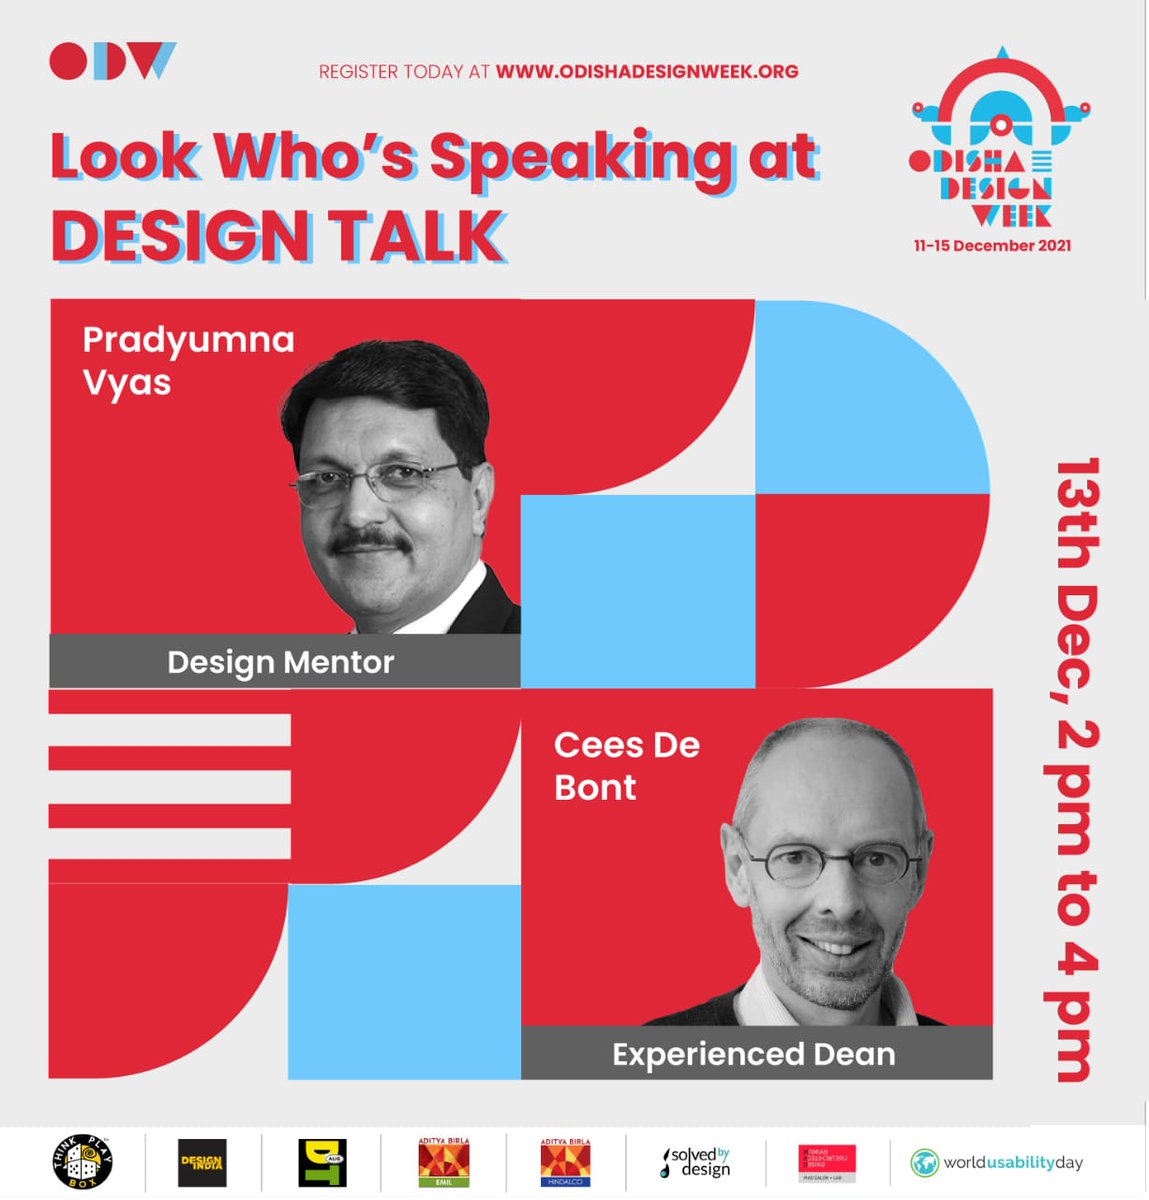 Look who's speaking at Odisha Design Week!

PRADYUMNA VYAS (@vyas_pradyumna), former Director at NID and Design Mentor 

CEES DE BONT (@BONTCees), Experienced Dean and Design Researcher

Time: 2 pm to 4 pm
~~~~
Register now!

odishadesigncouncil.com/odishadesignwe…

#odw_21 #design  #designweek